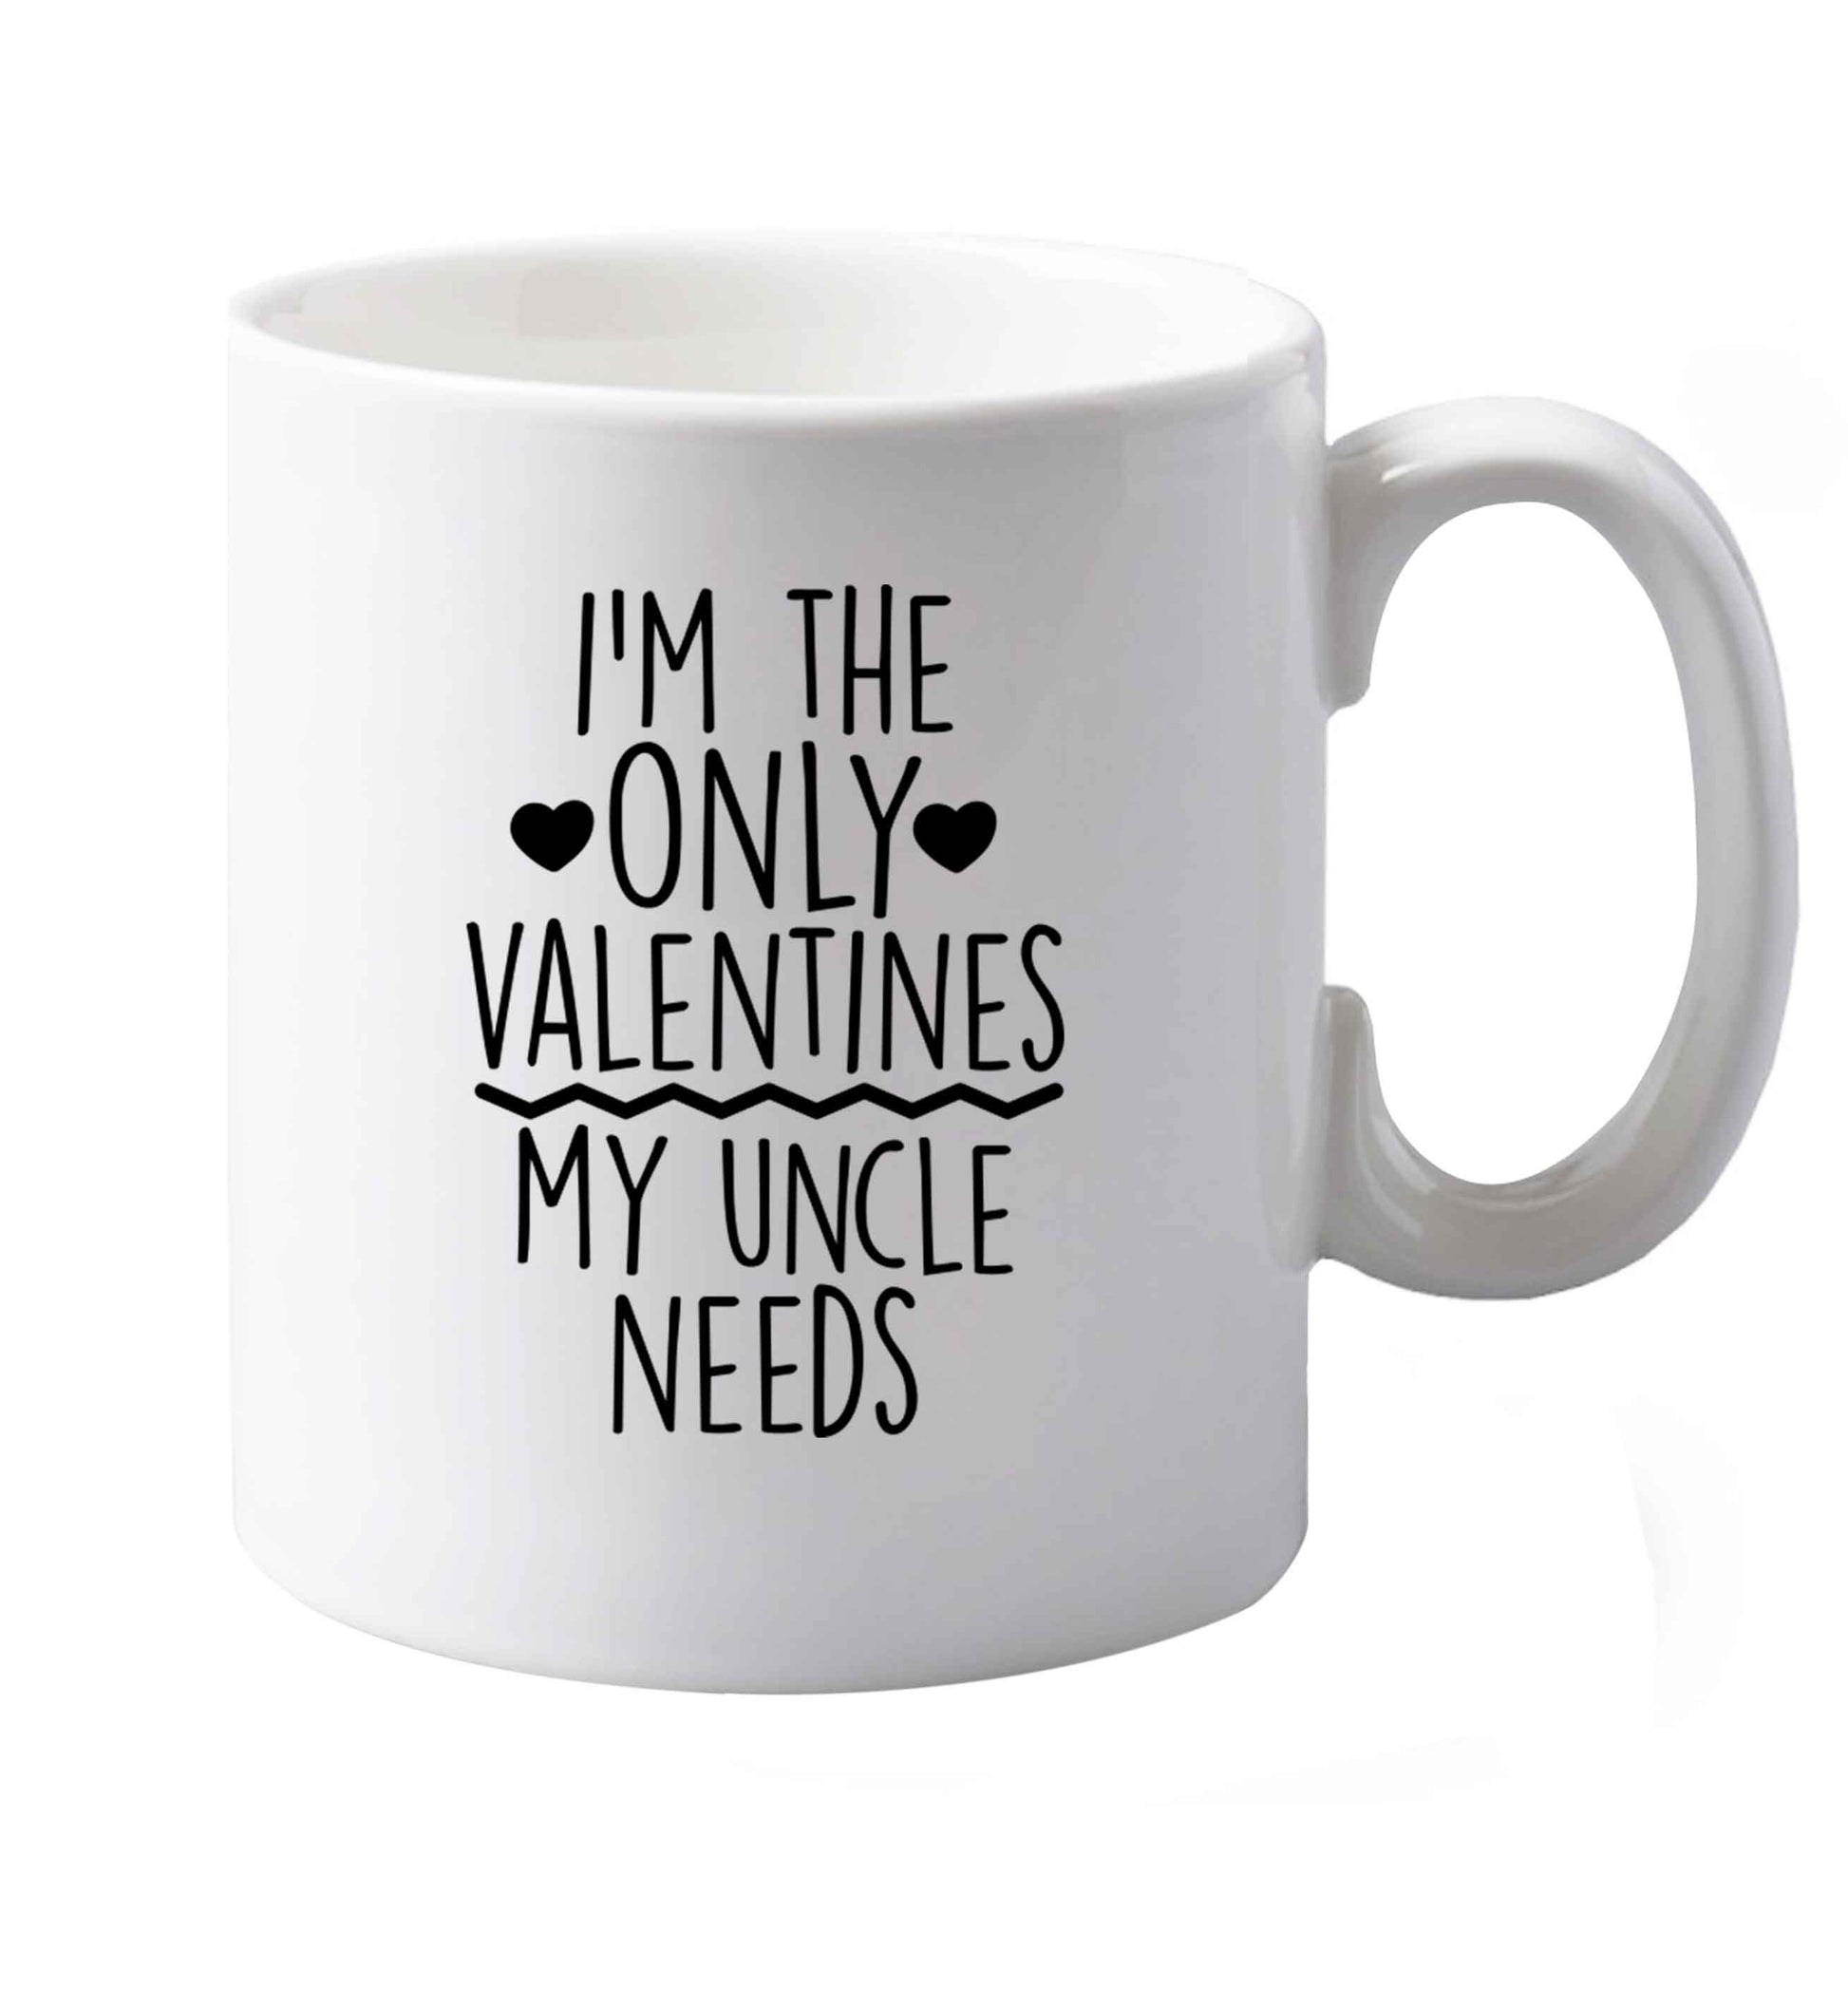 10 oz I'm the only valentines my uncle needs ceramic mug both sides